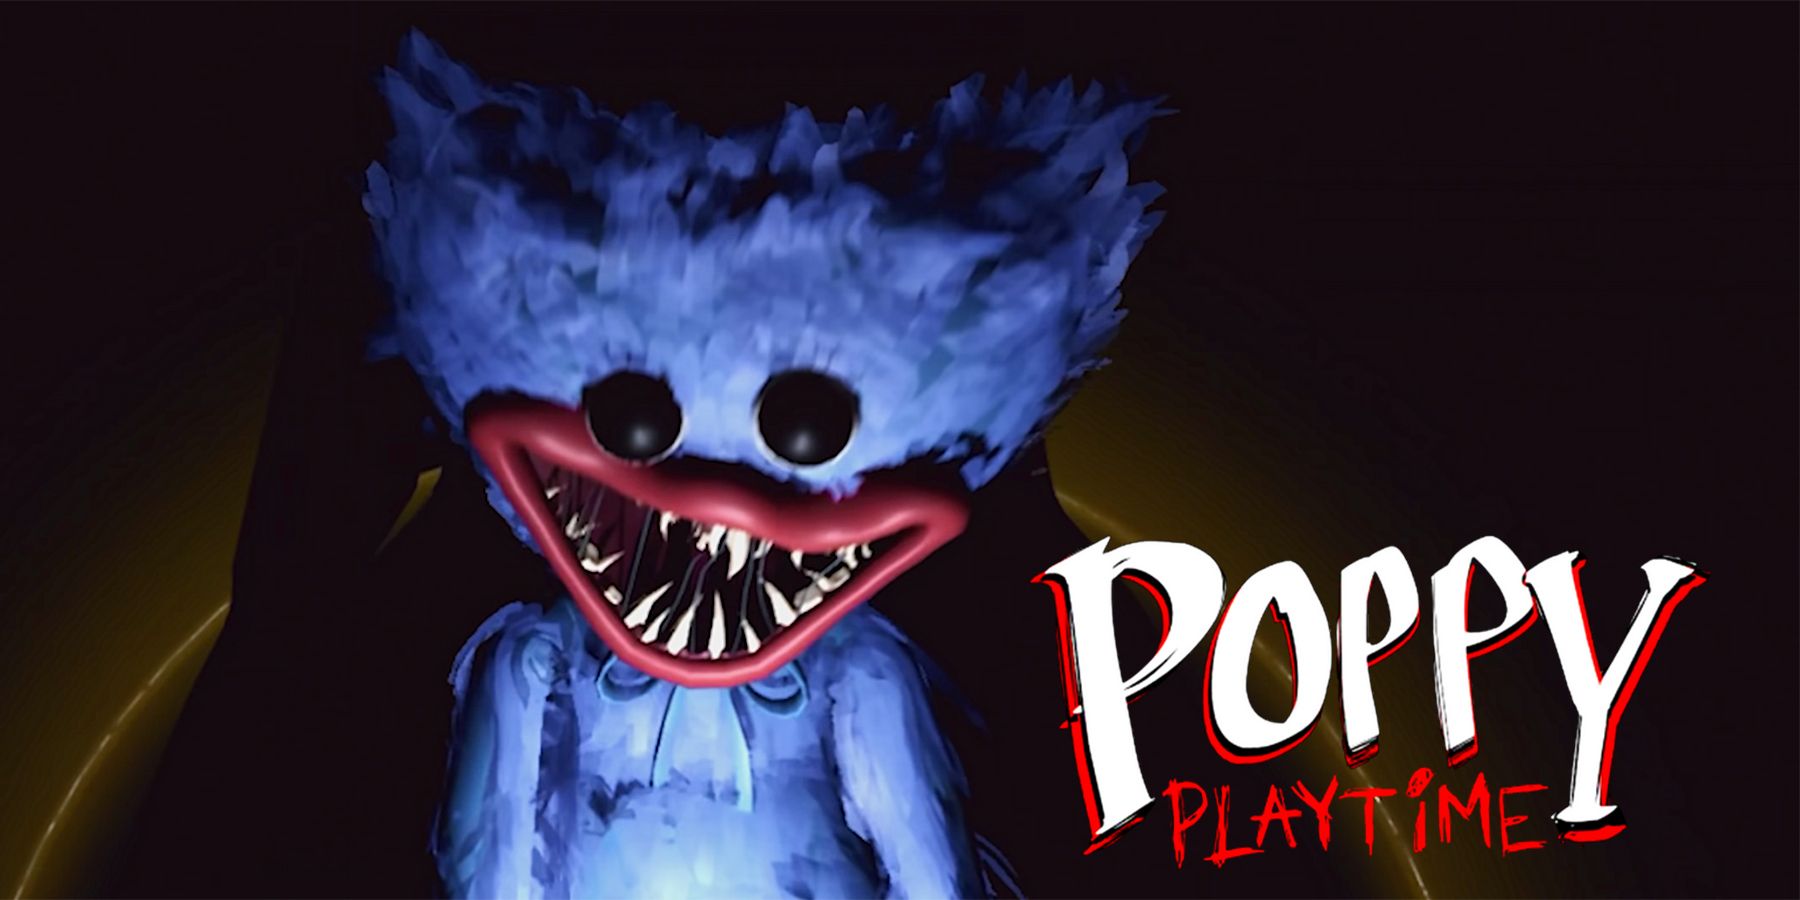 Poppy Playtime - Huggy Wuggy